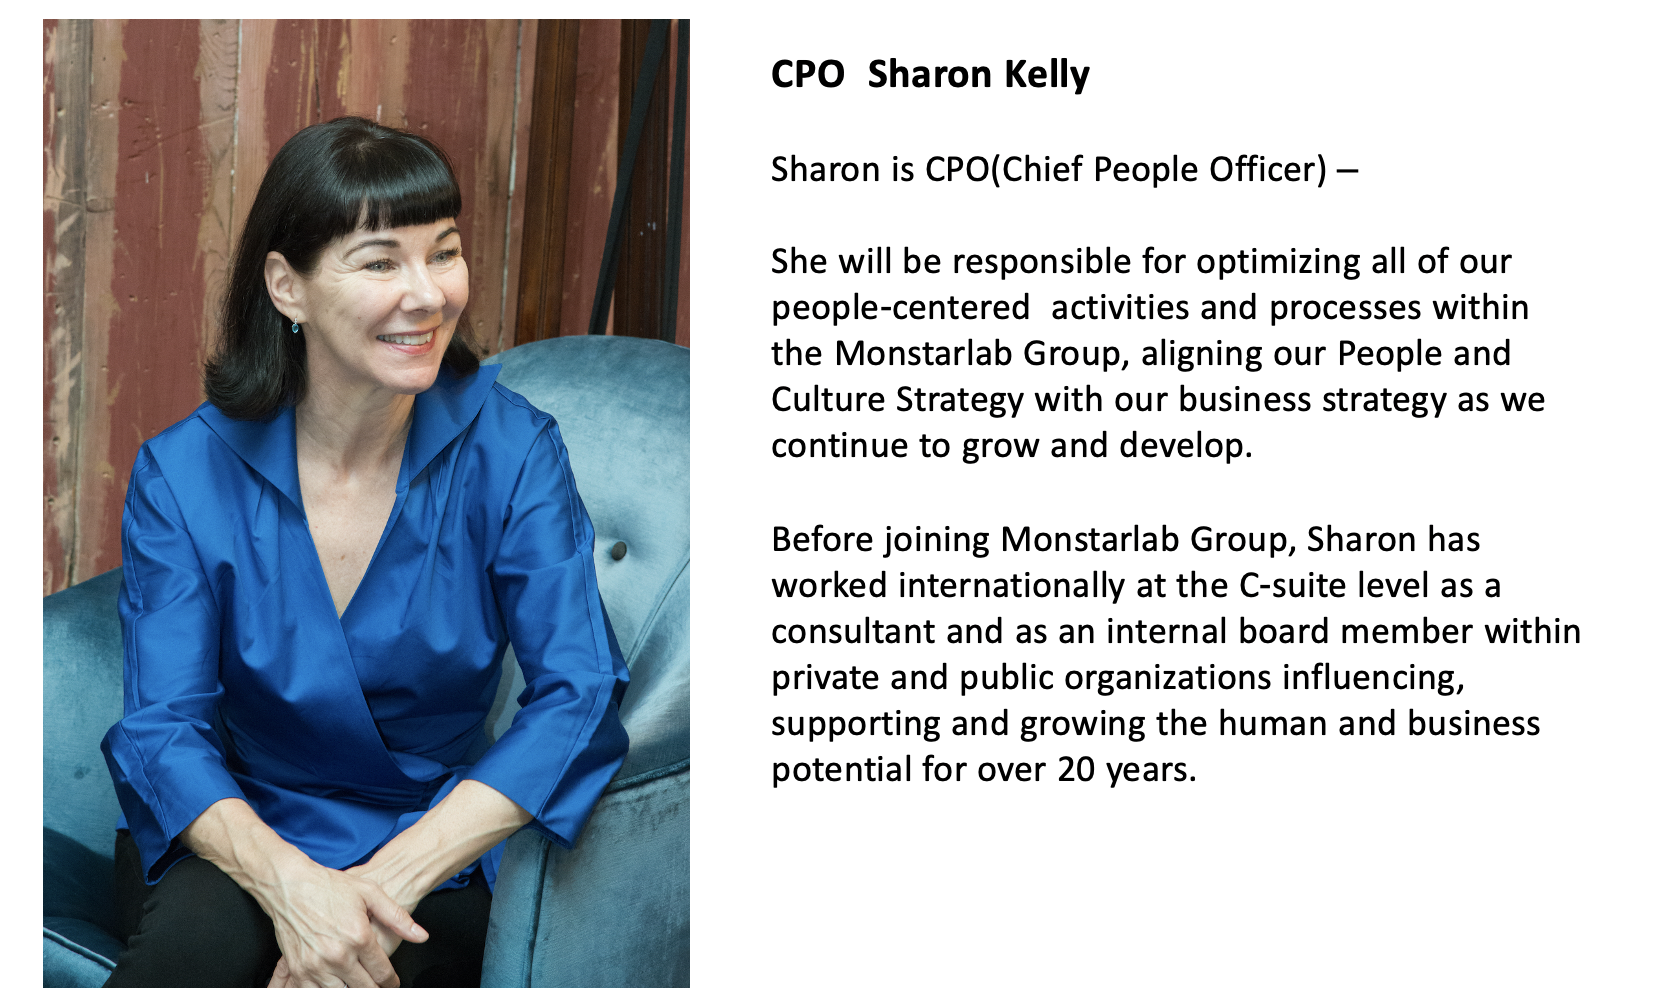 The profile of new Monstarlab CPO, Sharon Kelly